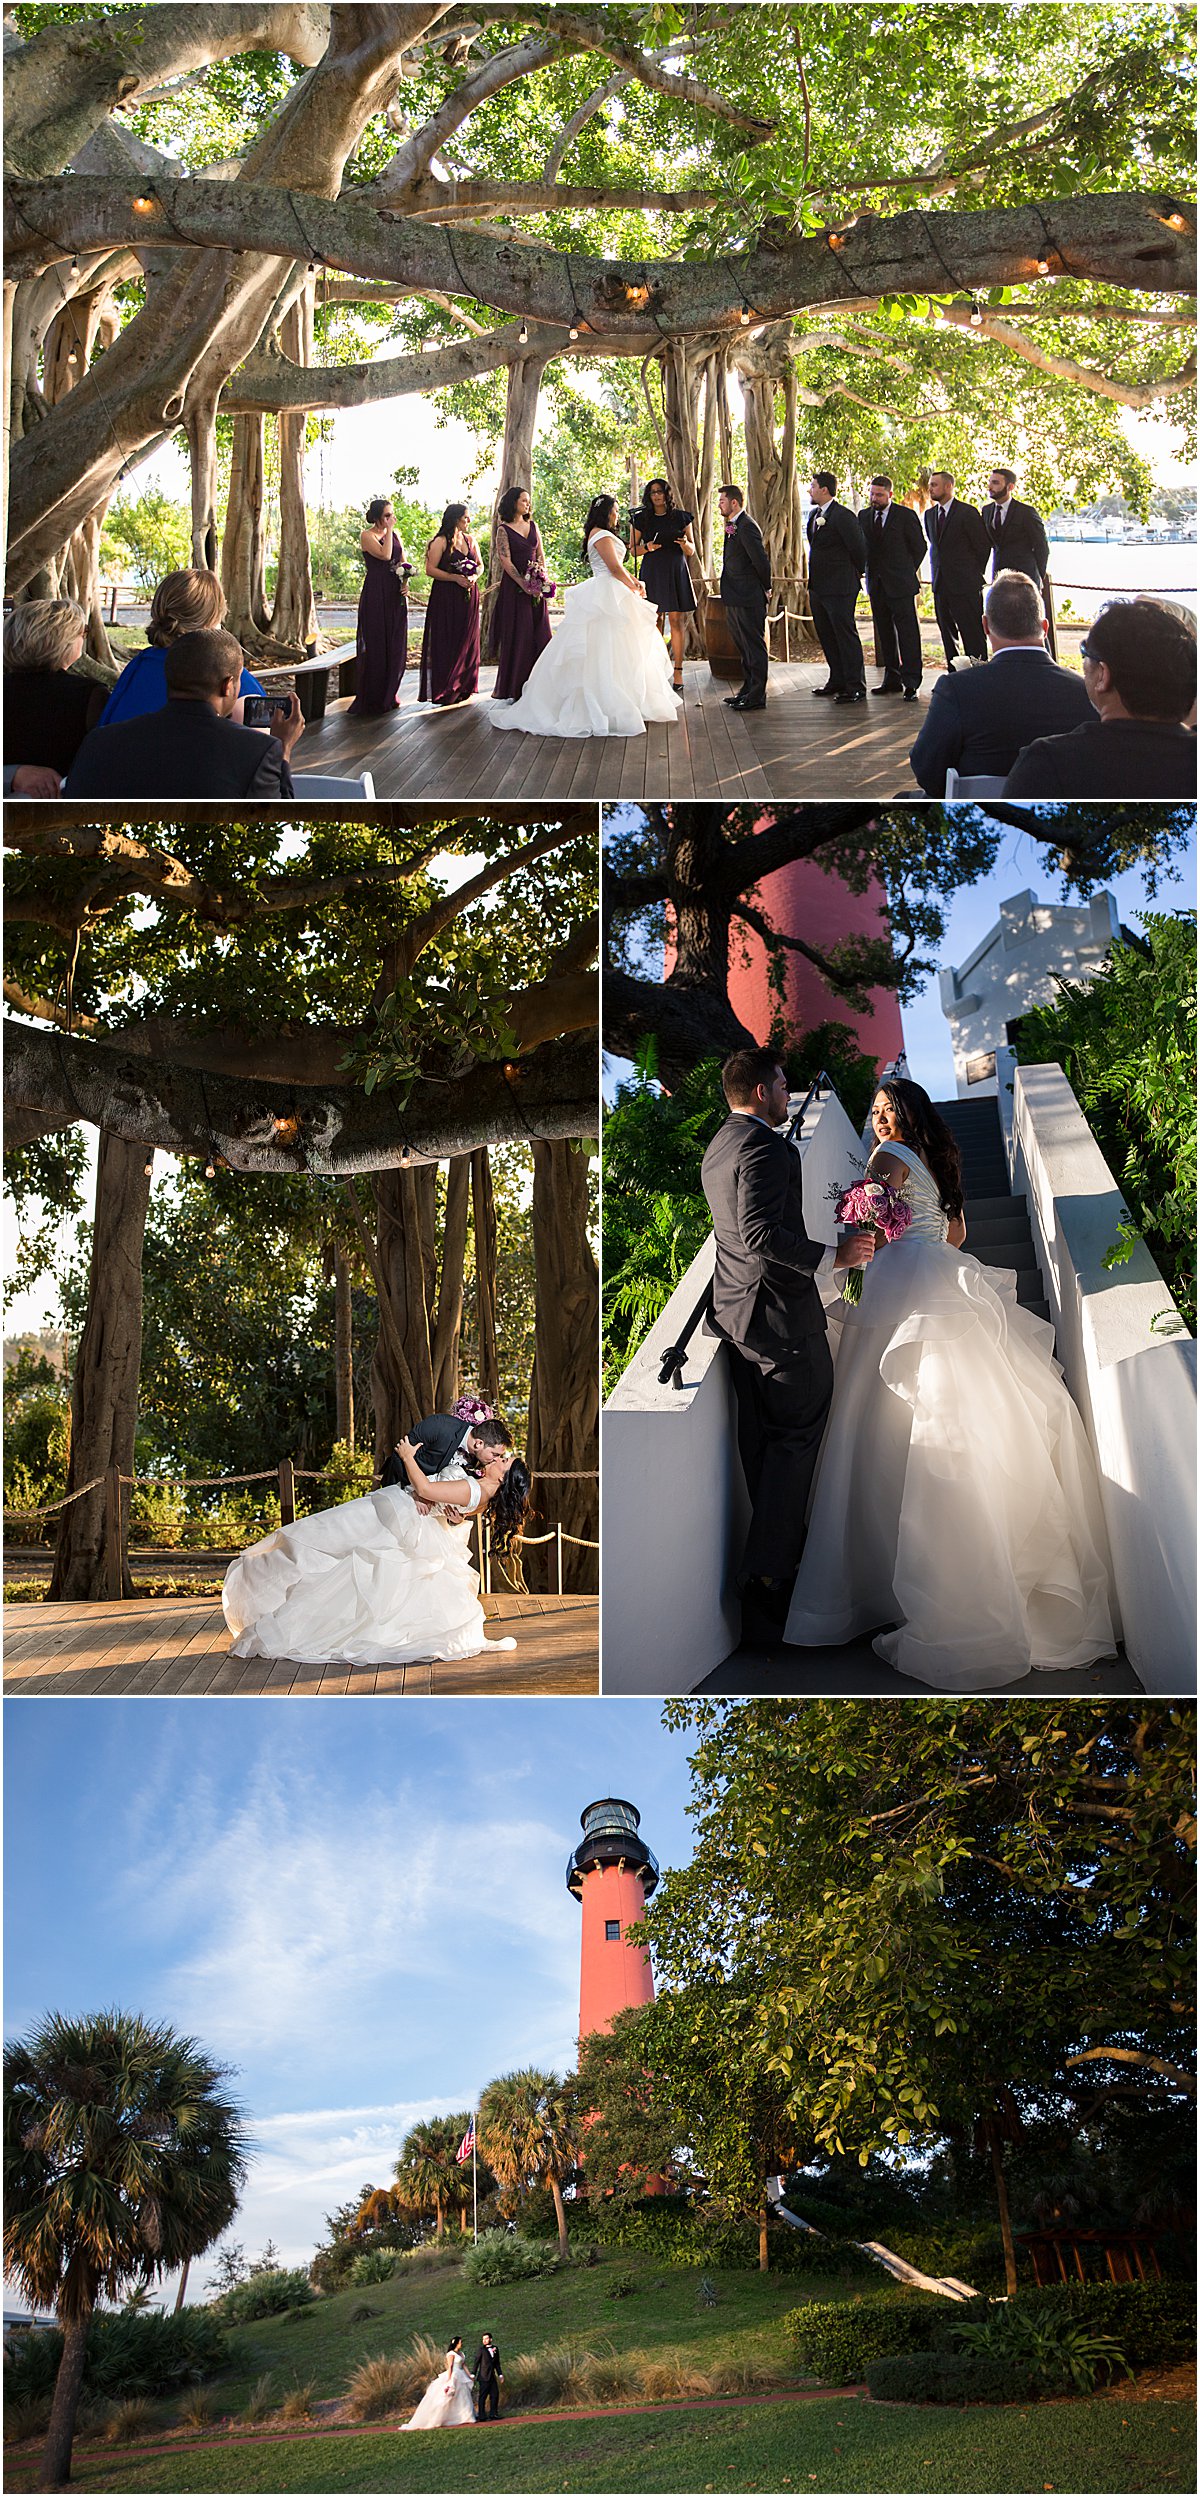 Elegant Purple and White Wedding Ceremony | Jupiter Inlet Lighthouse | Jupiter Florida | Married in Palm Beach | www.marriedinpalmbeach.com | Jodi Fjelde Photography